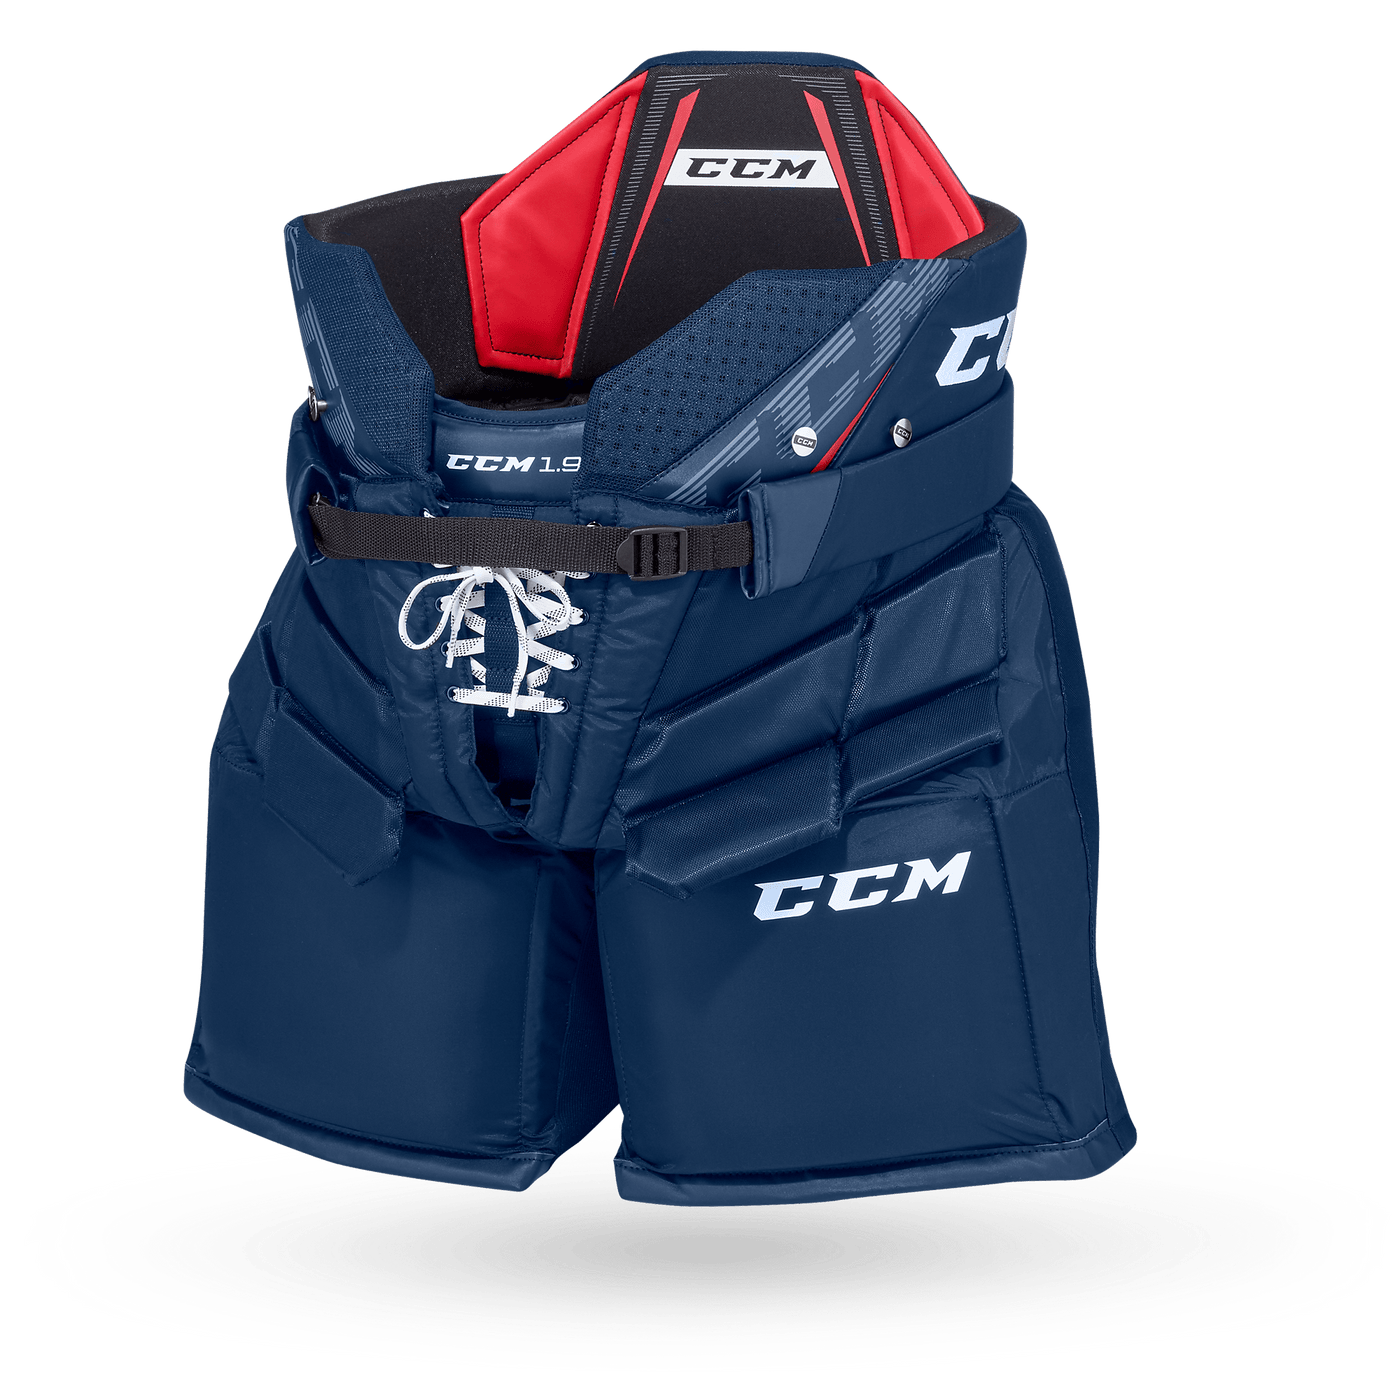 CCM 1.9 Senior Goalie Pants Navy XL - The Hockey Shop Source For Sports